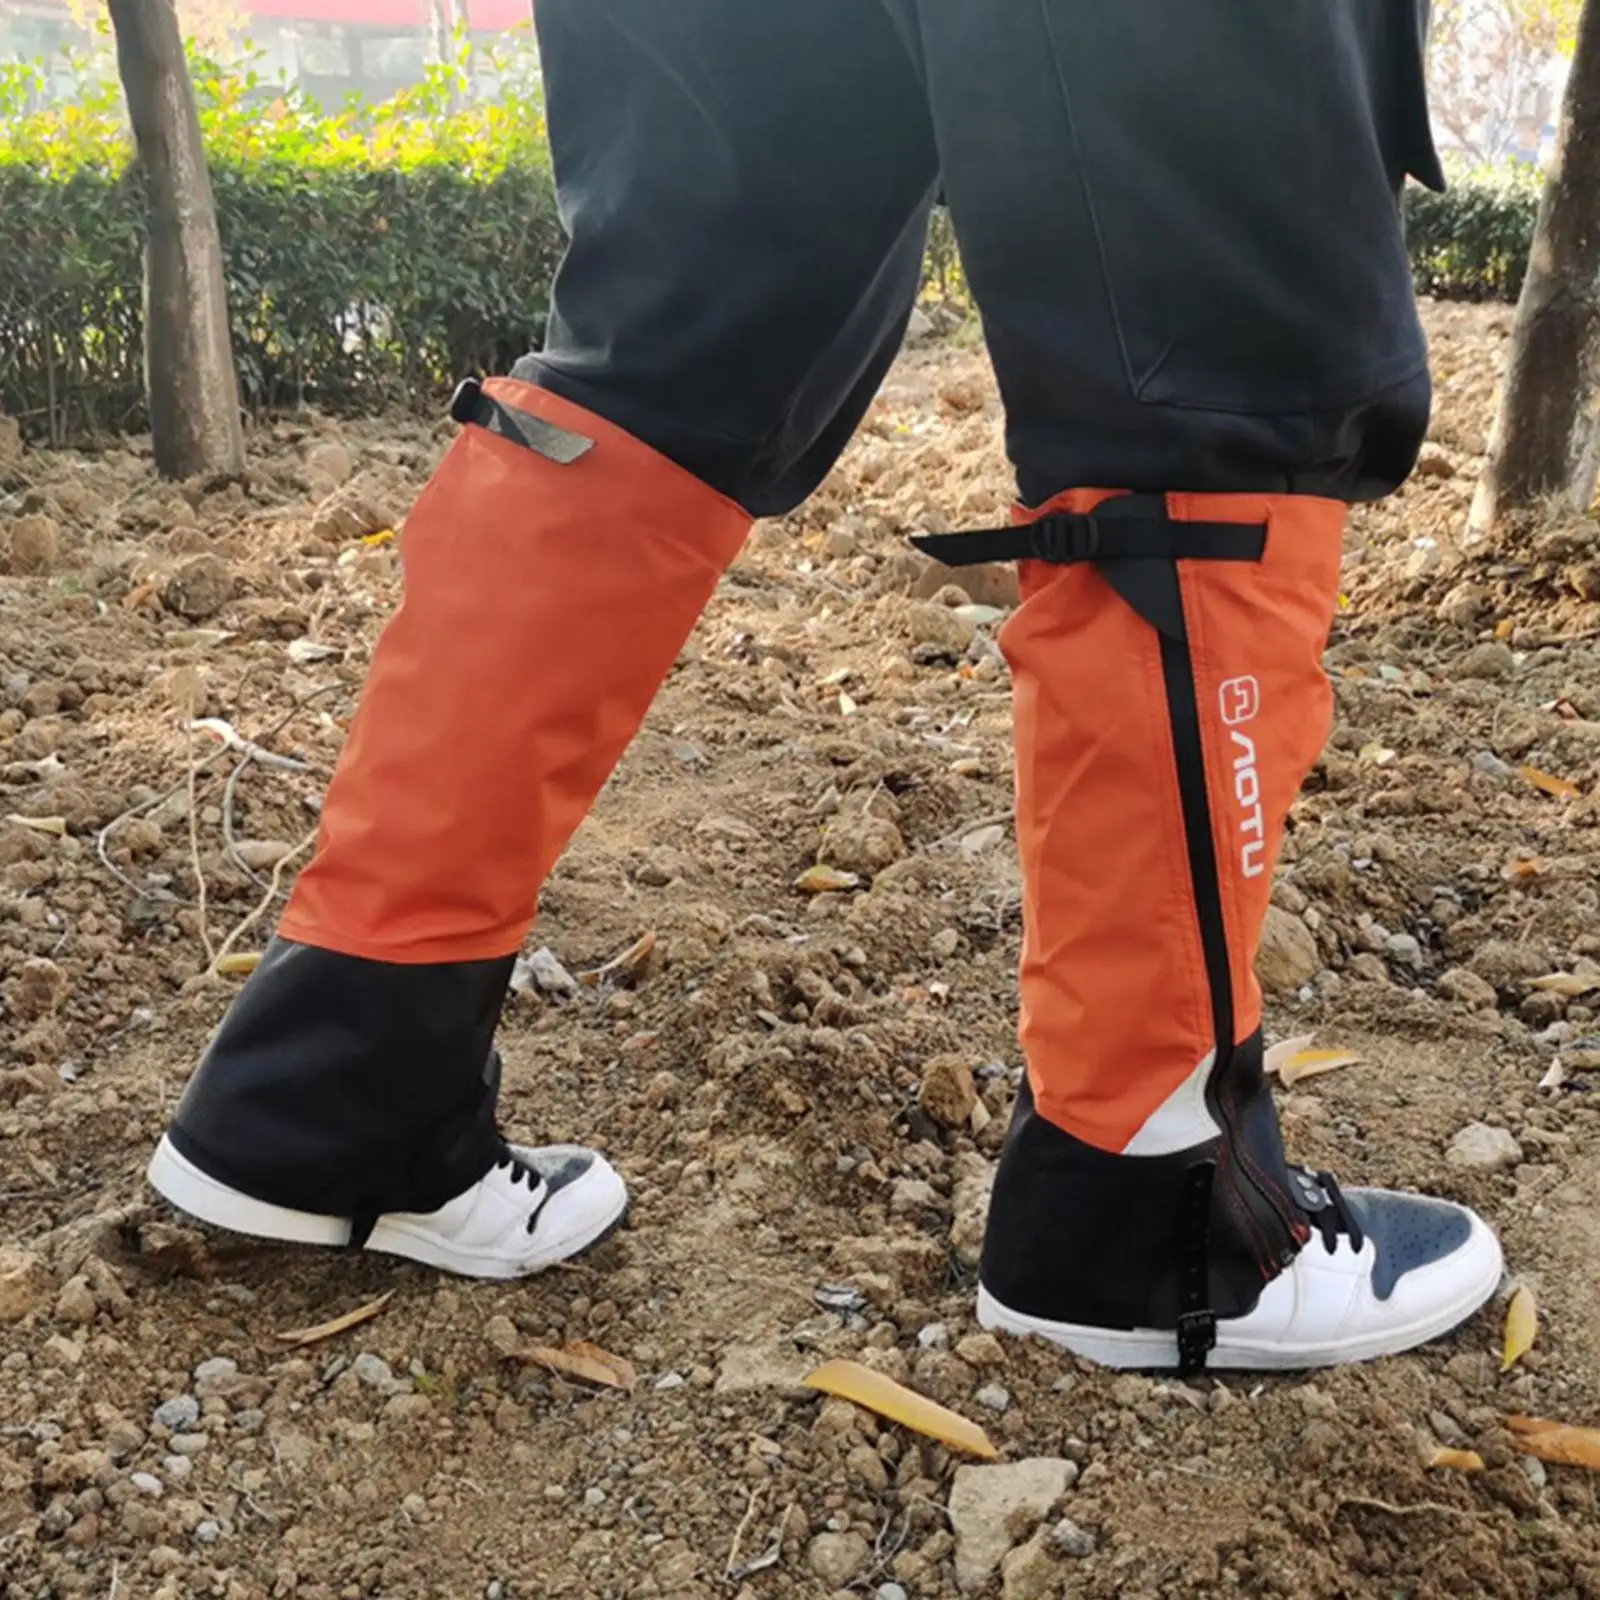 Leg Gaiters Waterproof Snow Boot Reflective Strips Legging Guard Lightweight Leg Warmers Cover for Walking Climbing Camping